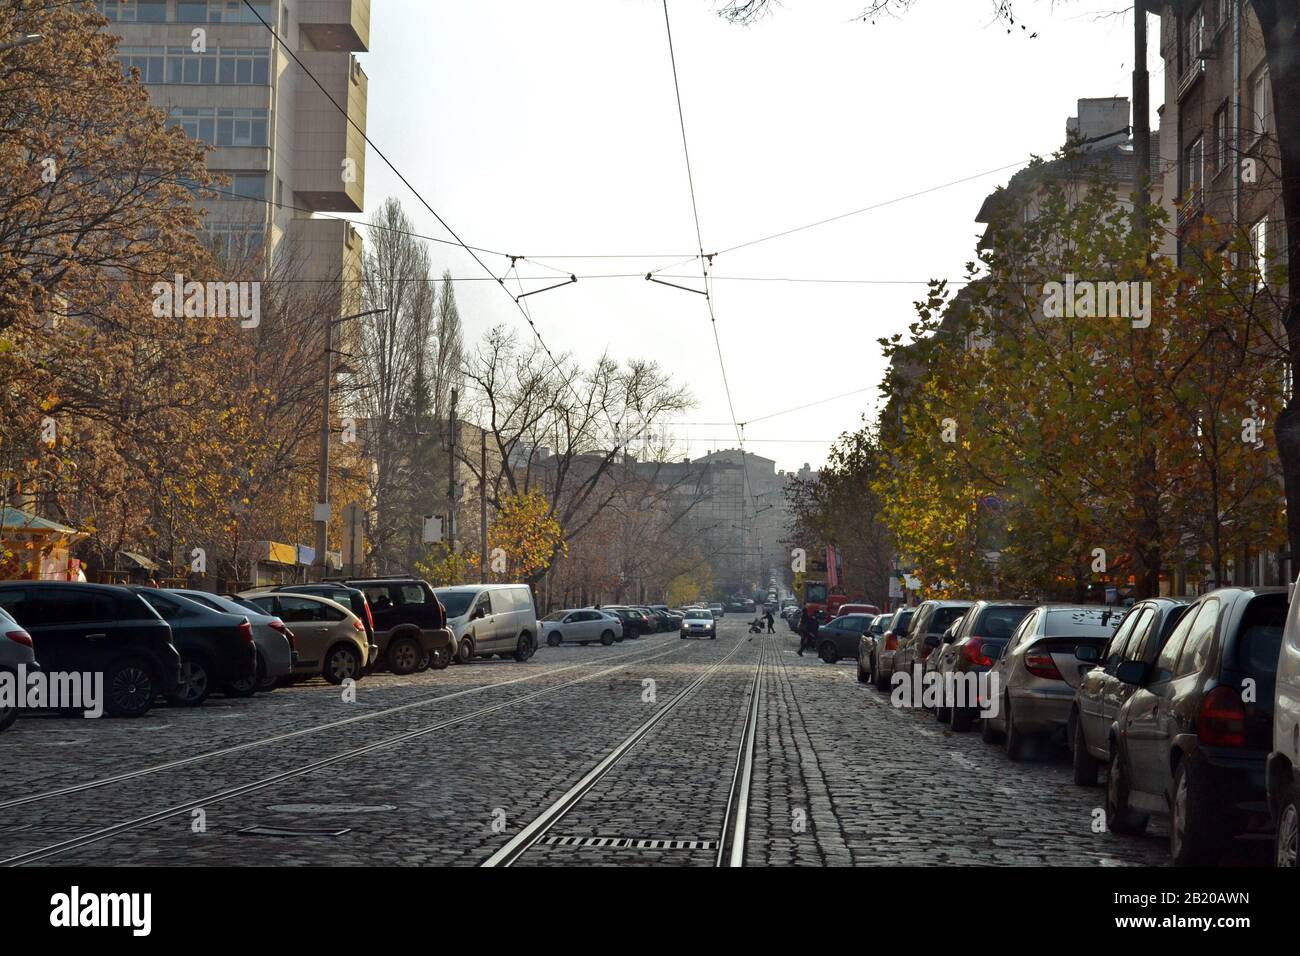 Gepflasterte Straße in Sofia, der Hauptstadt Bulgariens. Stockfoto